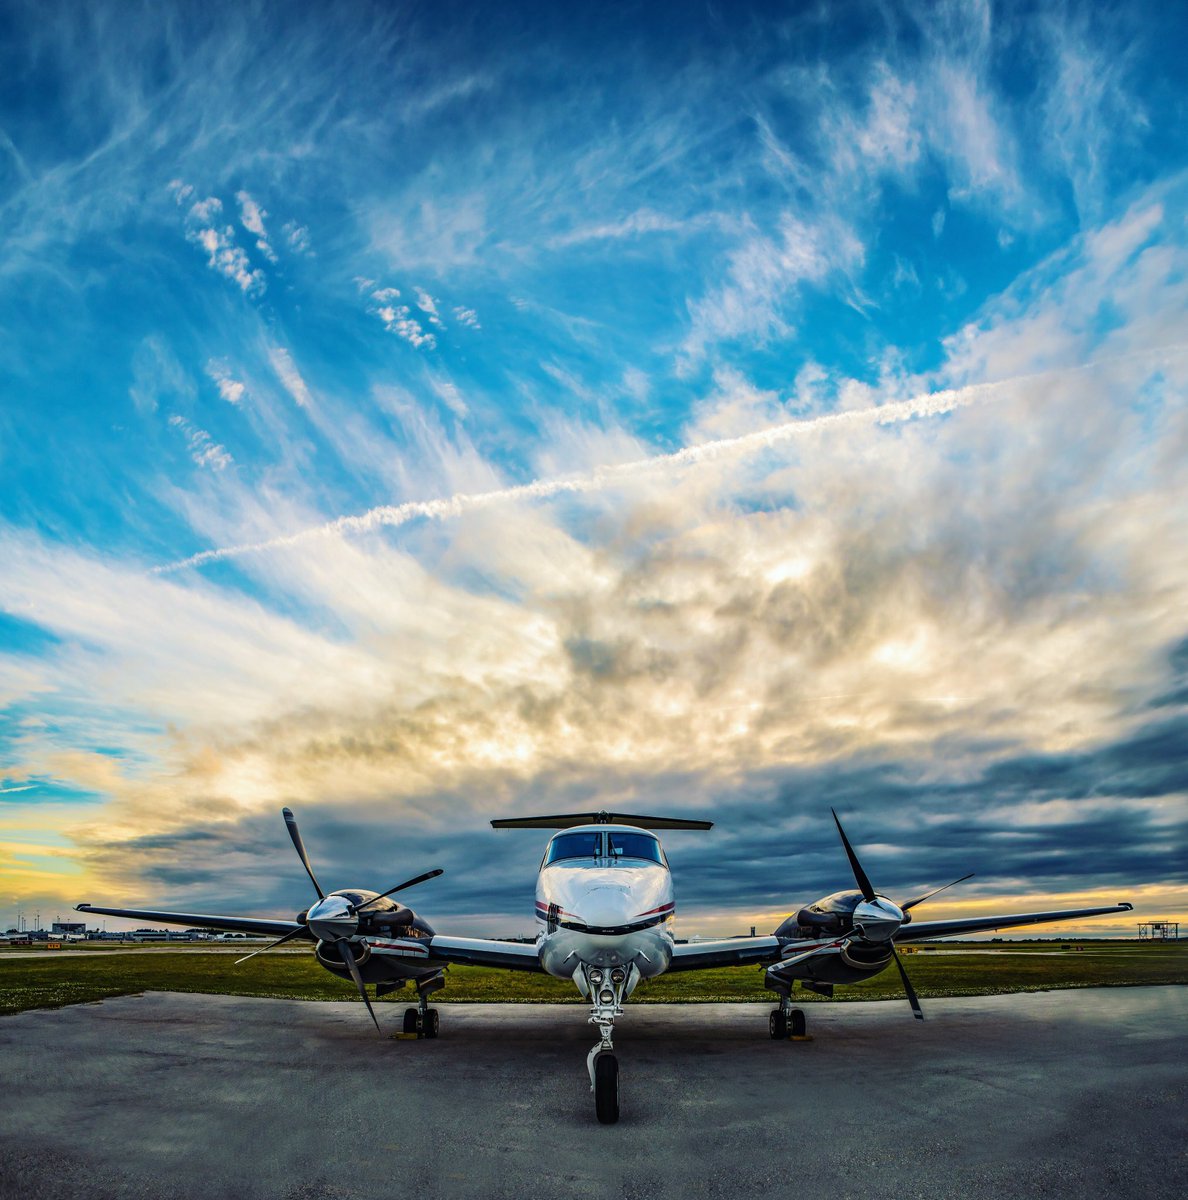 Happy 100th post to us🎊1️⃣0️⃣0️⃣🍾
Cheers to the next 100🎈🛩
#EnjoywithEnvoy

#luxury #sunset #sky #clouds #plane #airplane #privatecharter #jetplane #aviationdaily #avnerd #bizav #bizavworks #envoyaviation #luxury #spring #blueskies #blue #aviation #melbournefl #florida #hangar